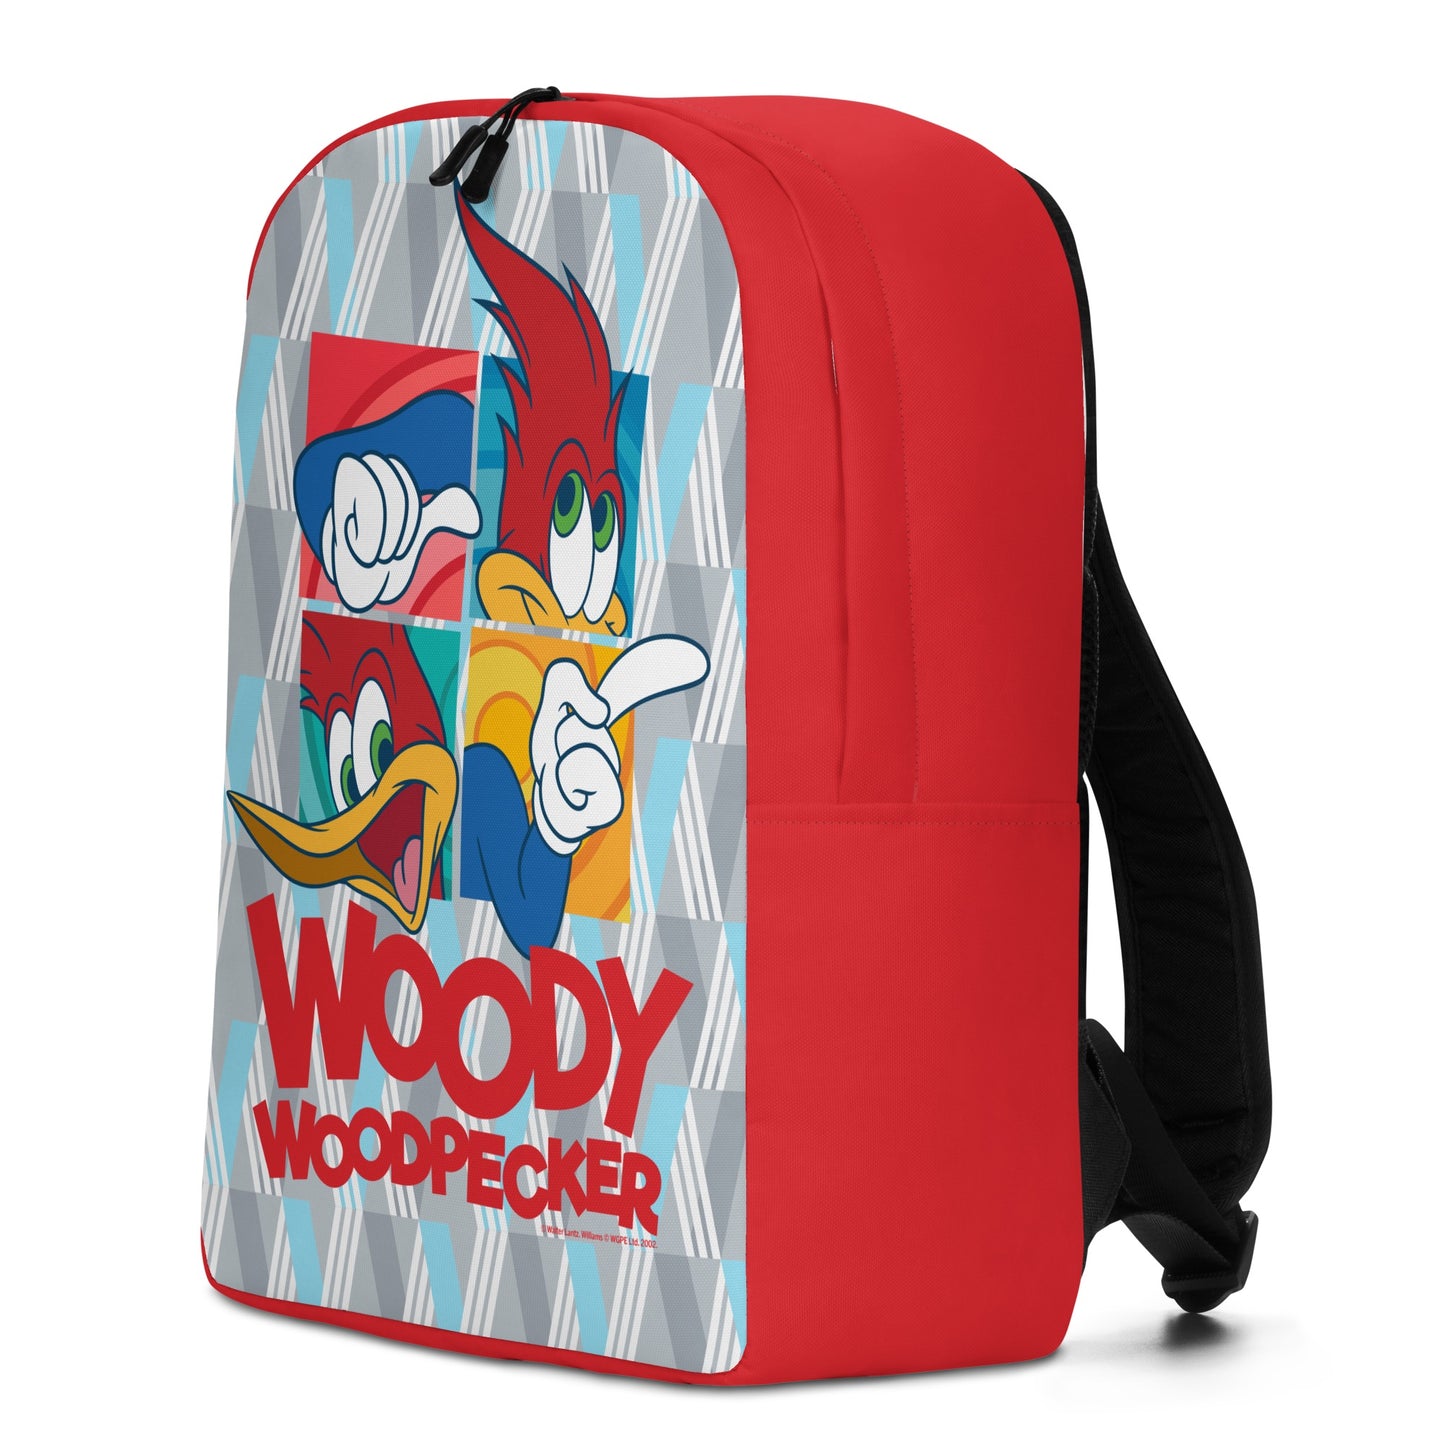 Woody Woodpecker Backpack